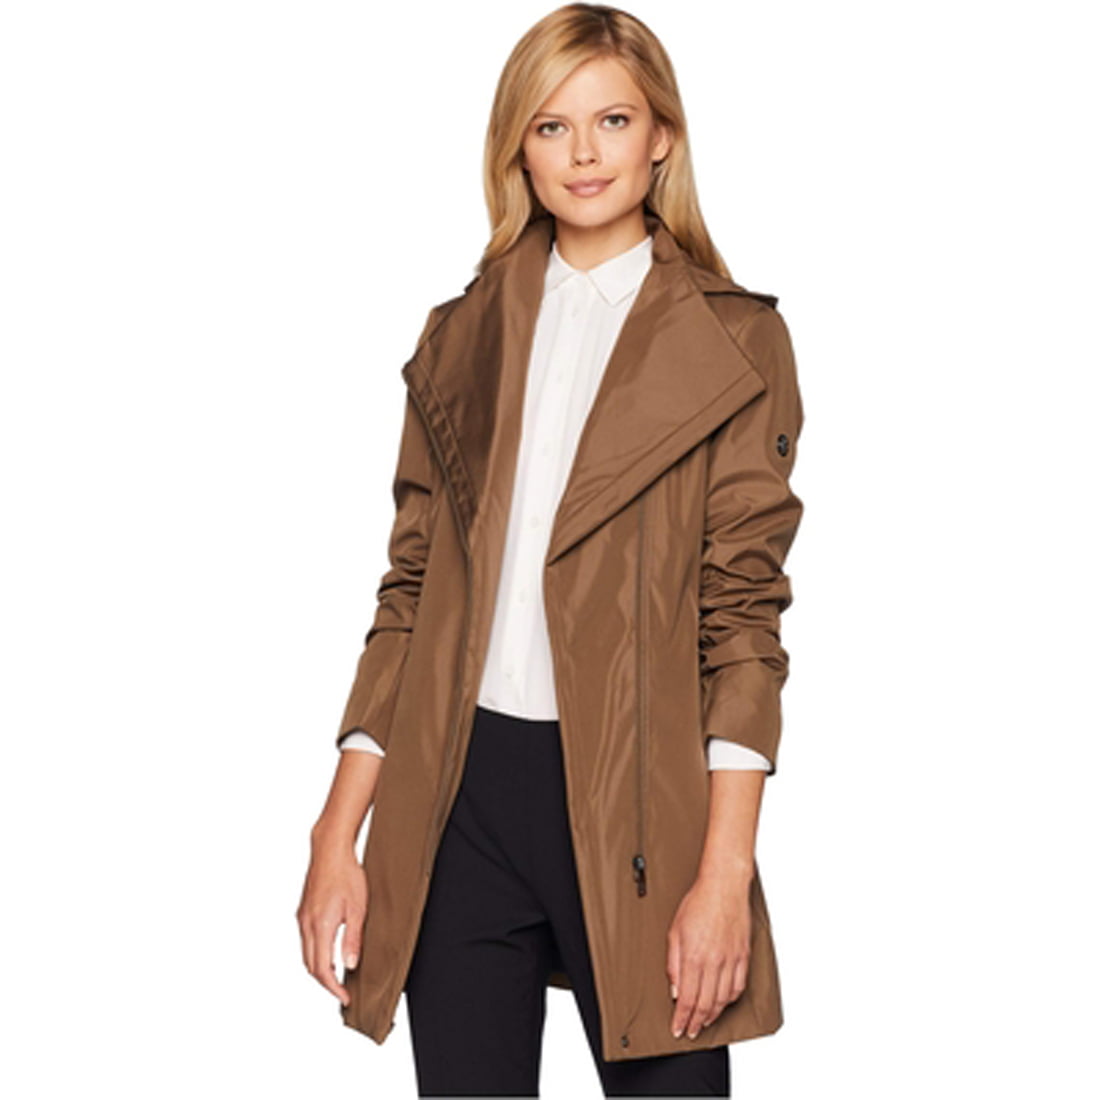 Calvin Klein Women's Hooded Raincoat with Belt, Truffle, Small 